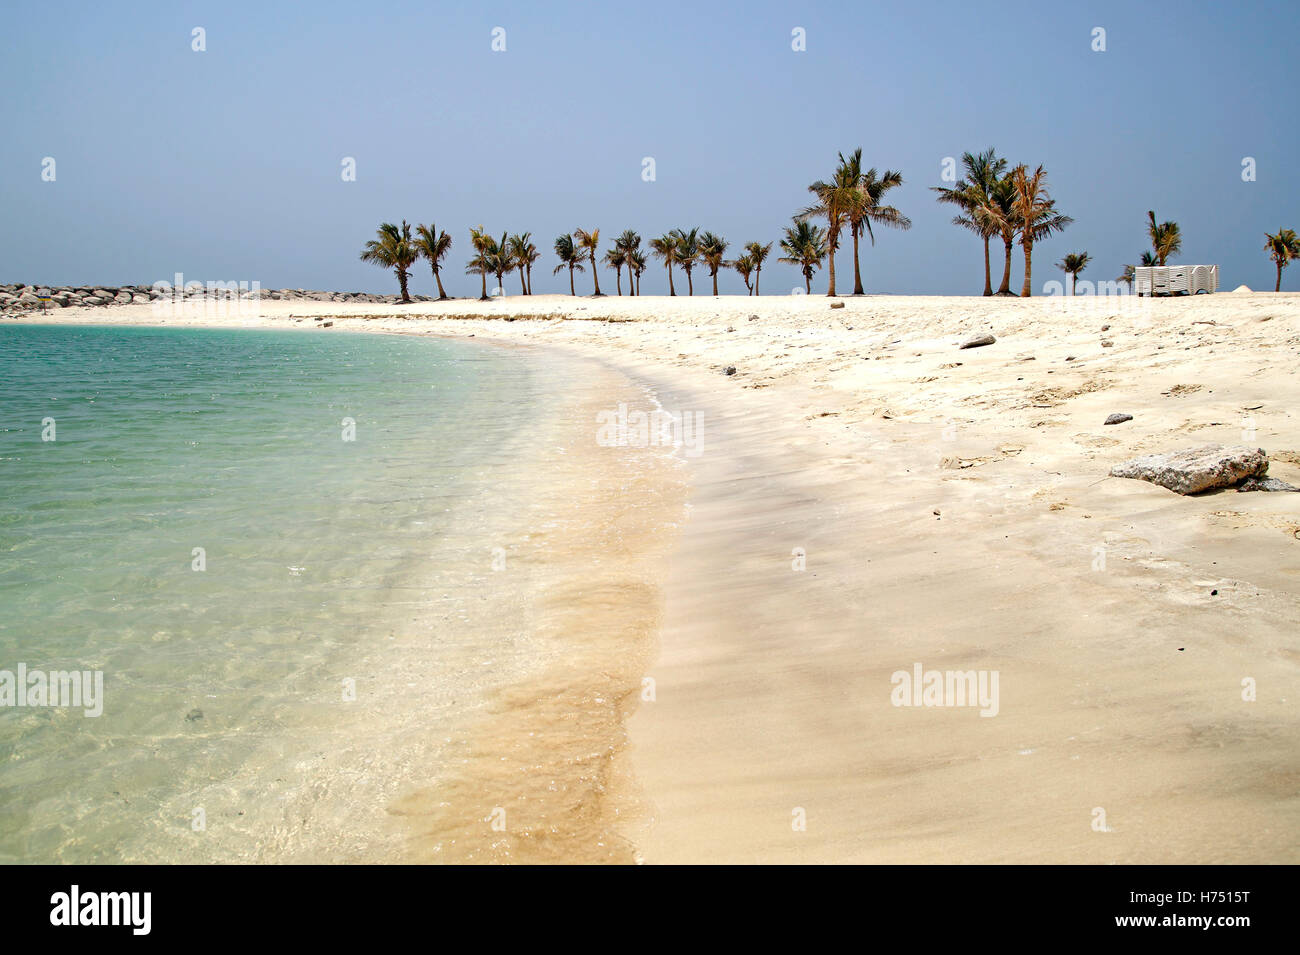 Dubai beach Stock Photo